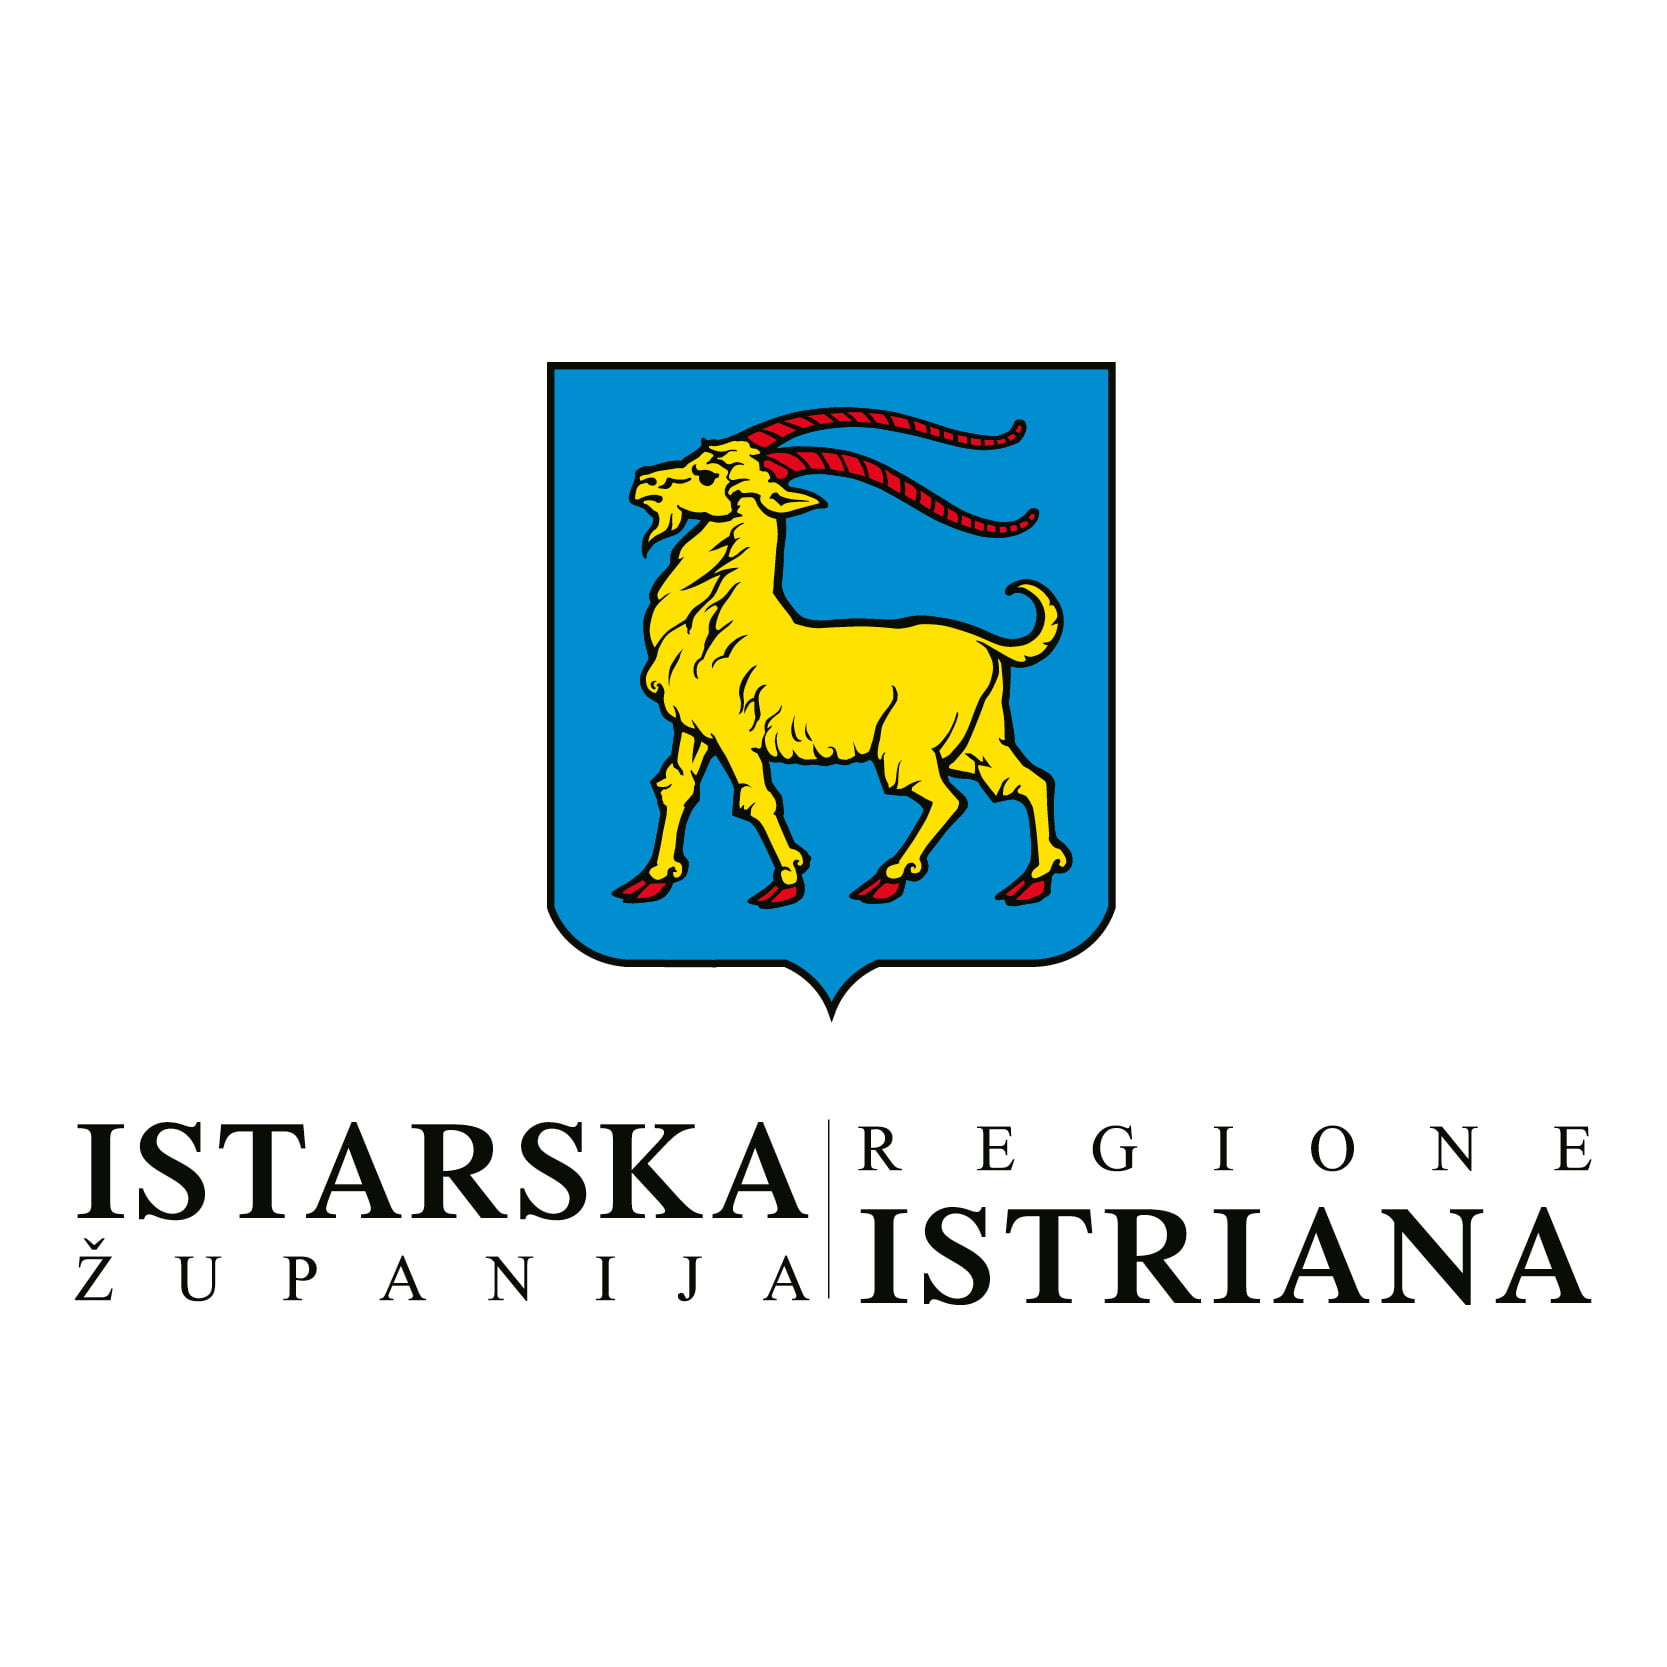 Region of Istria